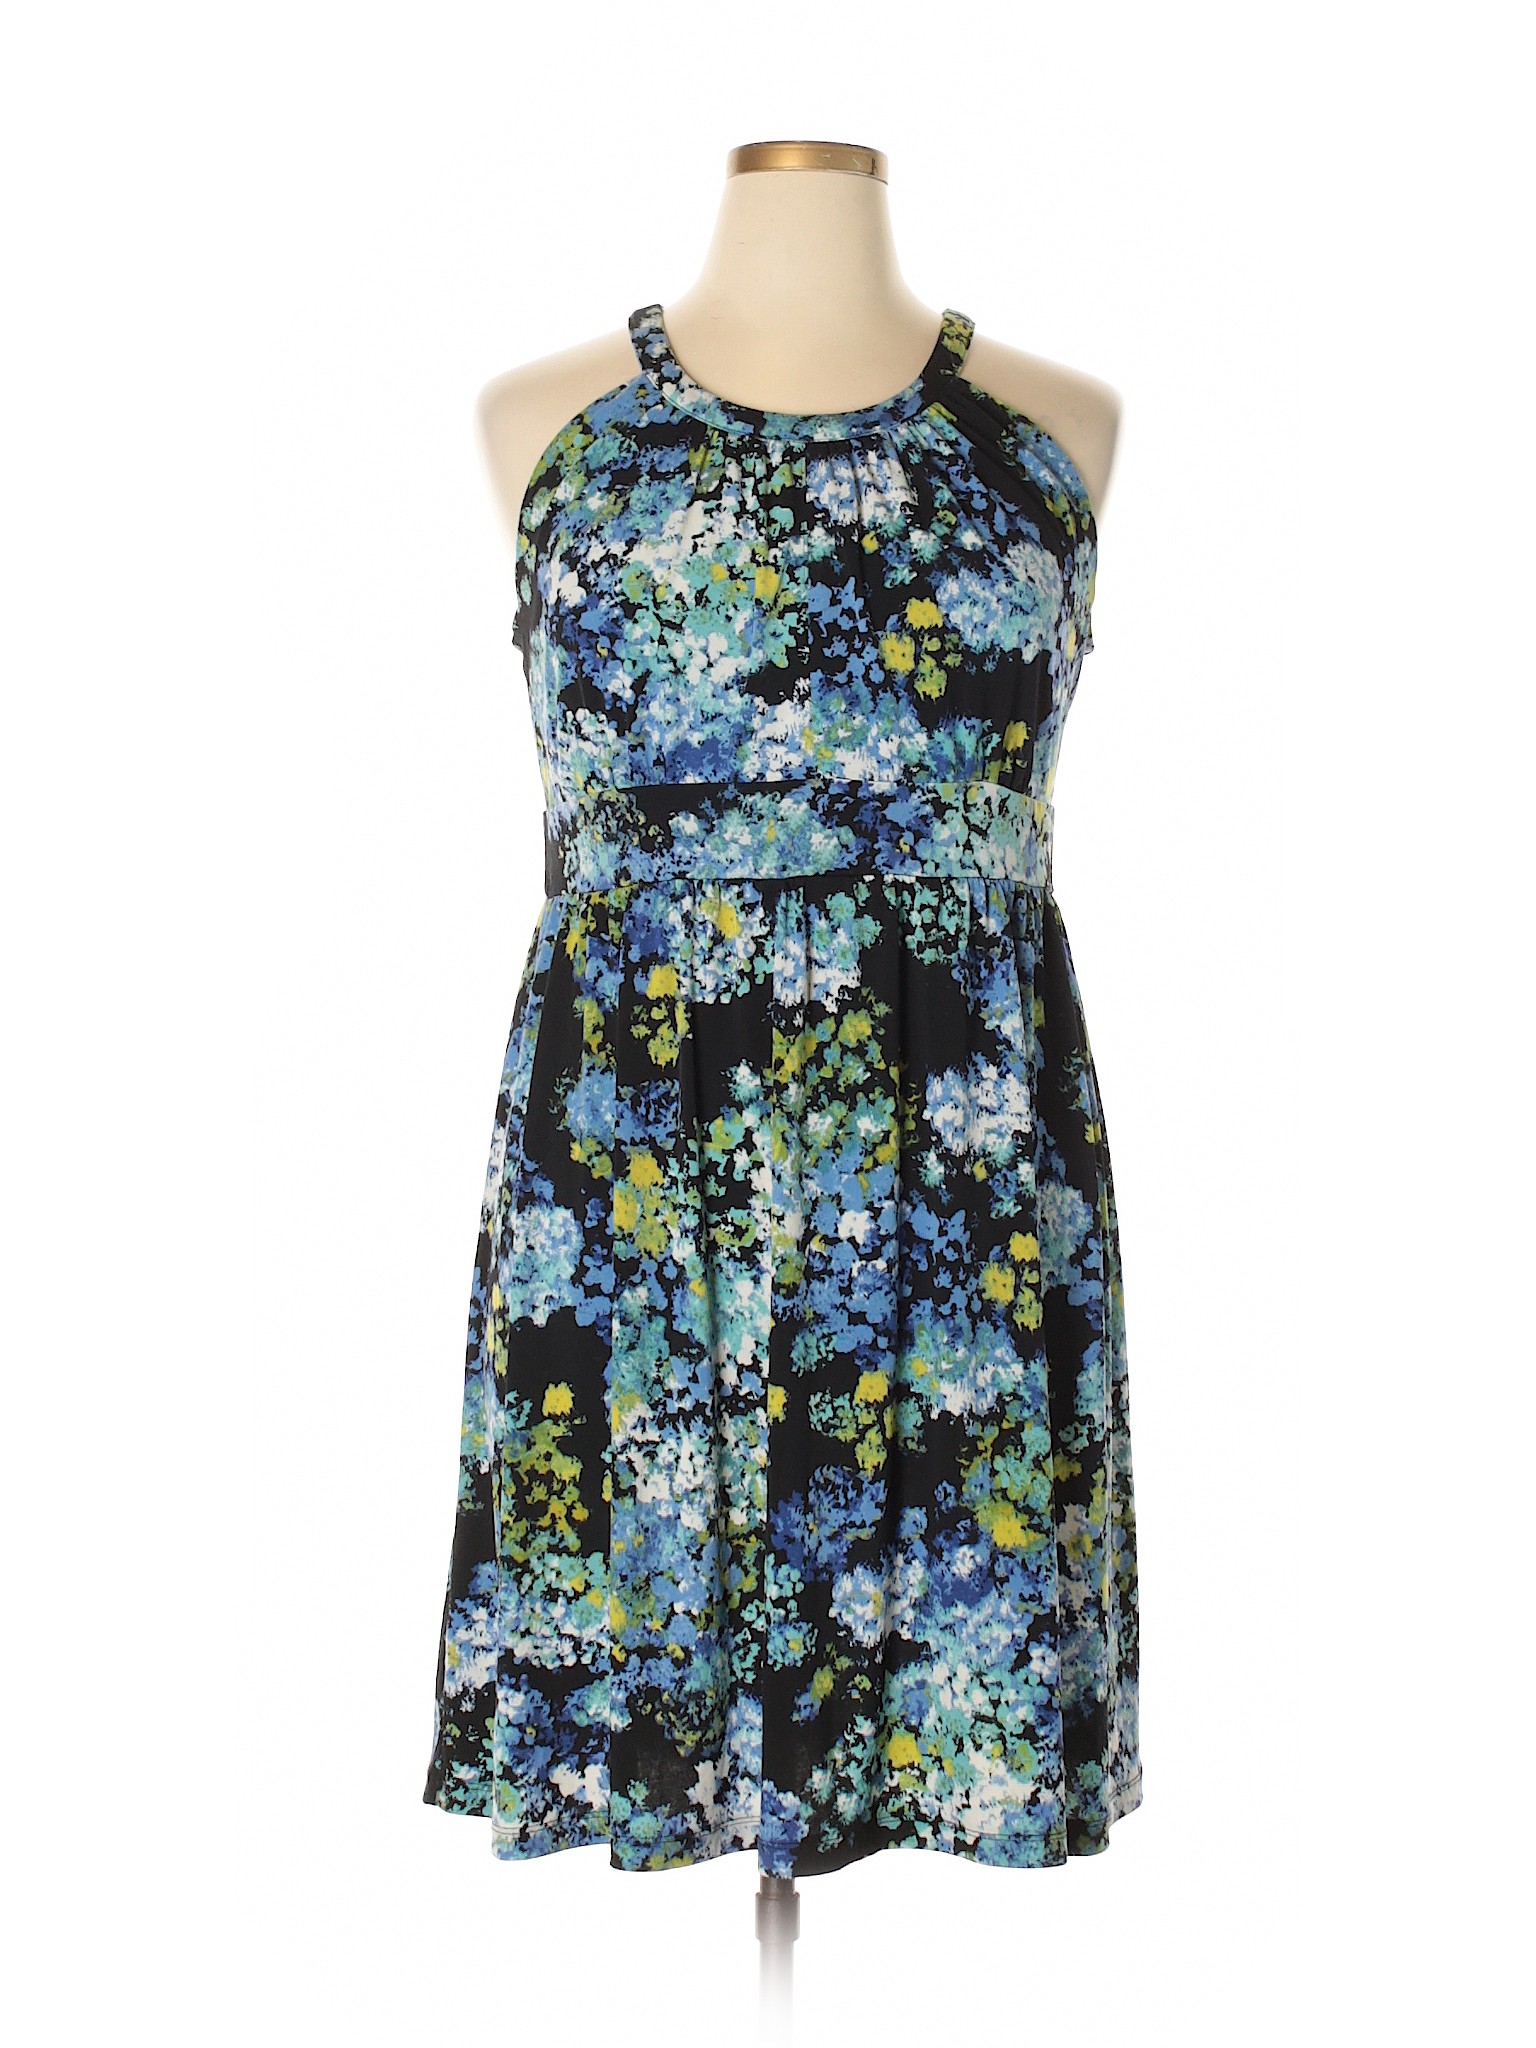 Apt. 9 Floral Blue Casual Dress Size XL - 70% off | thredUP